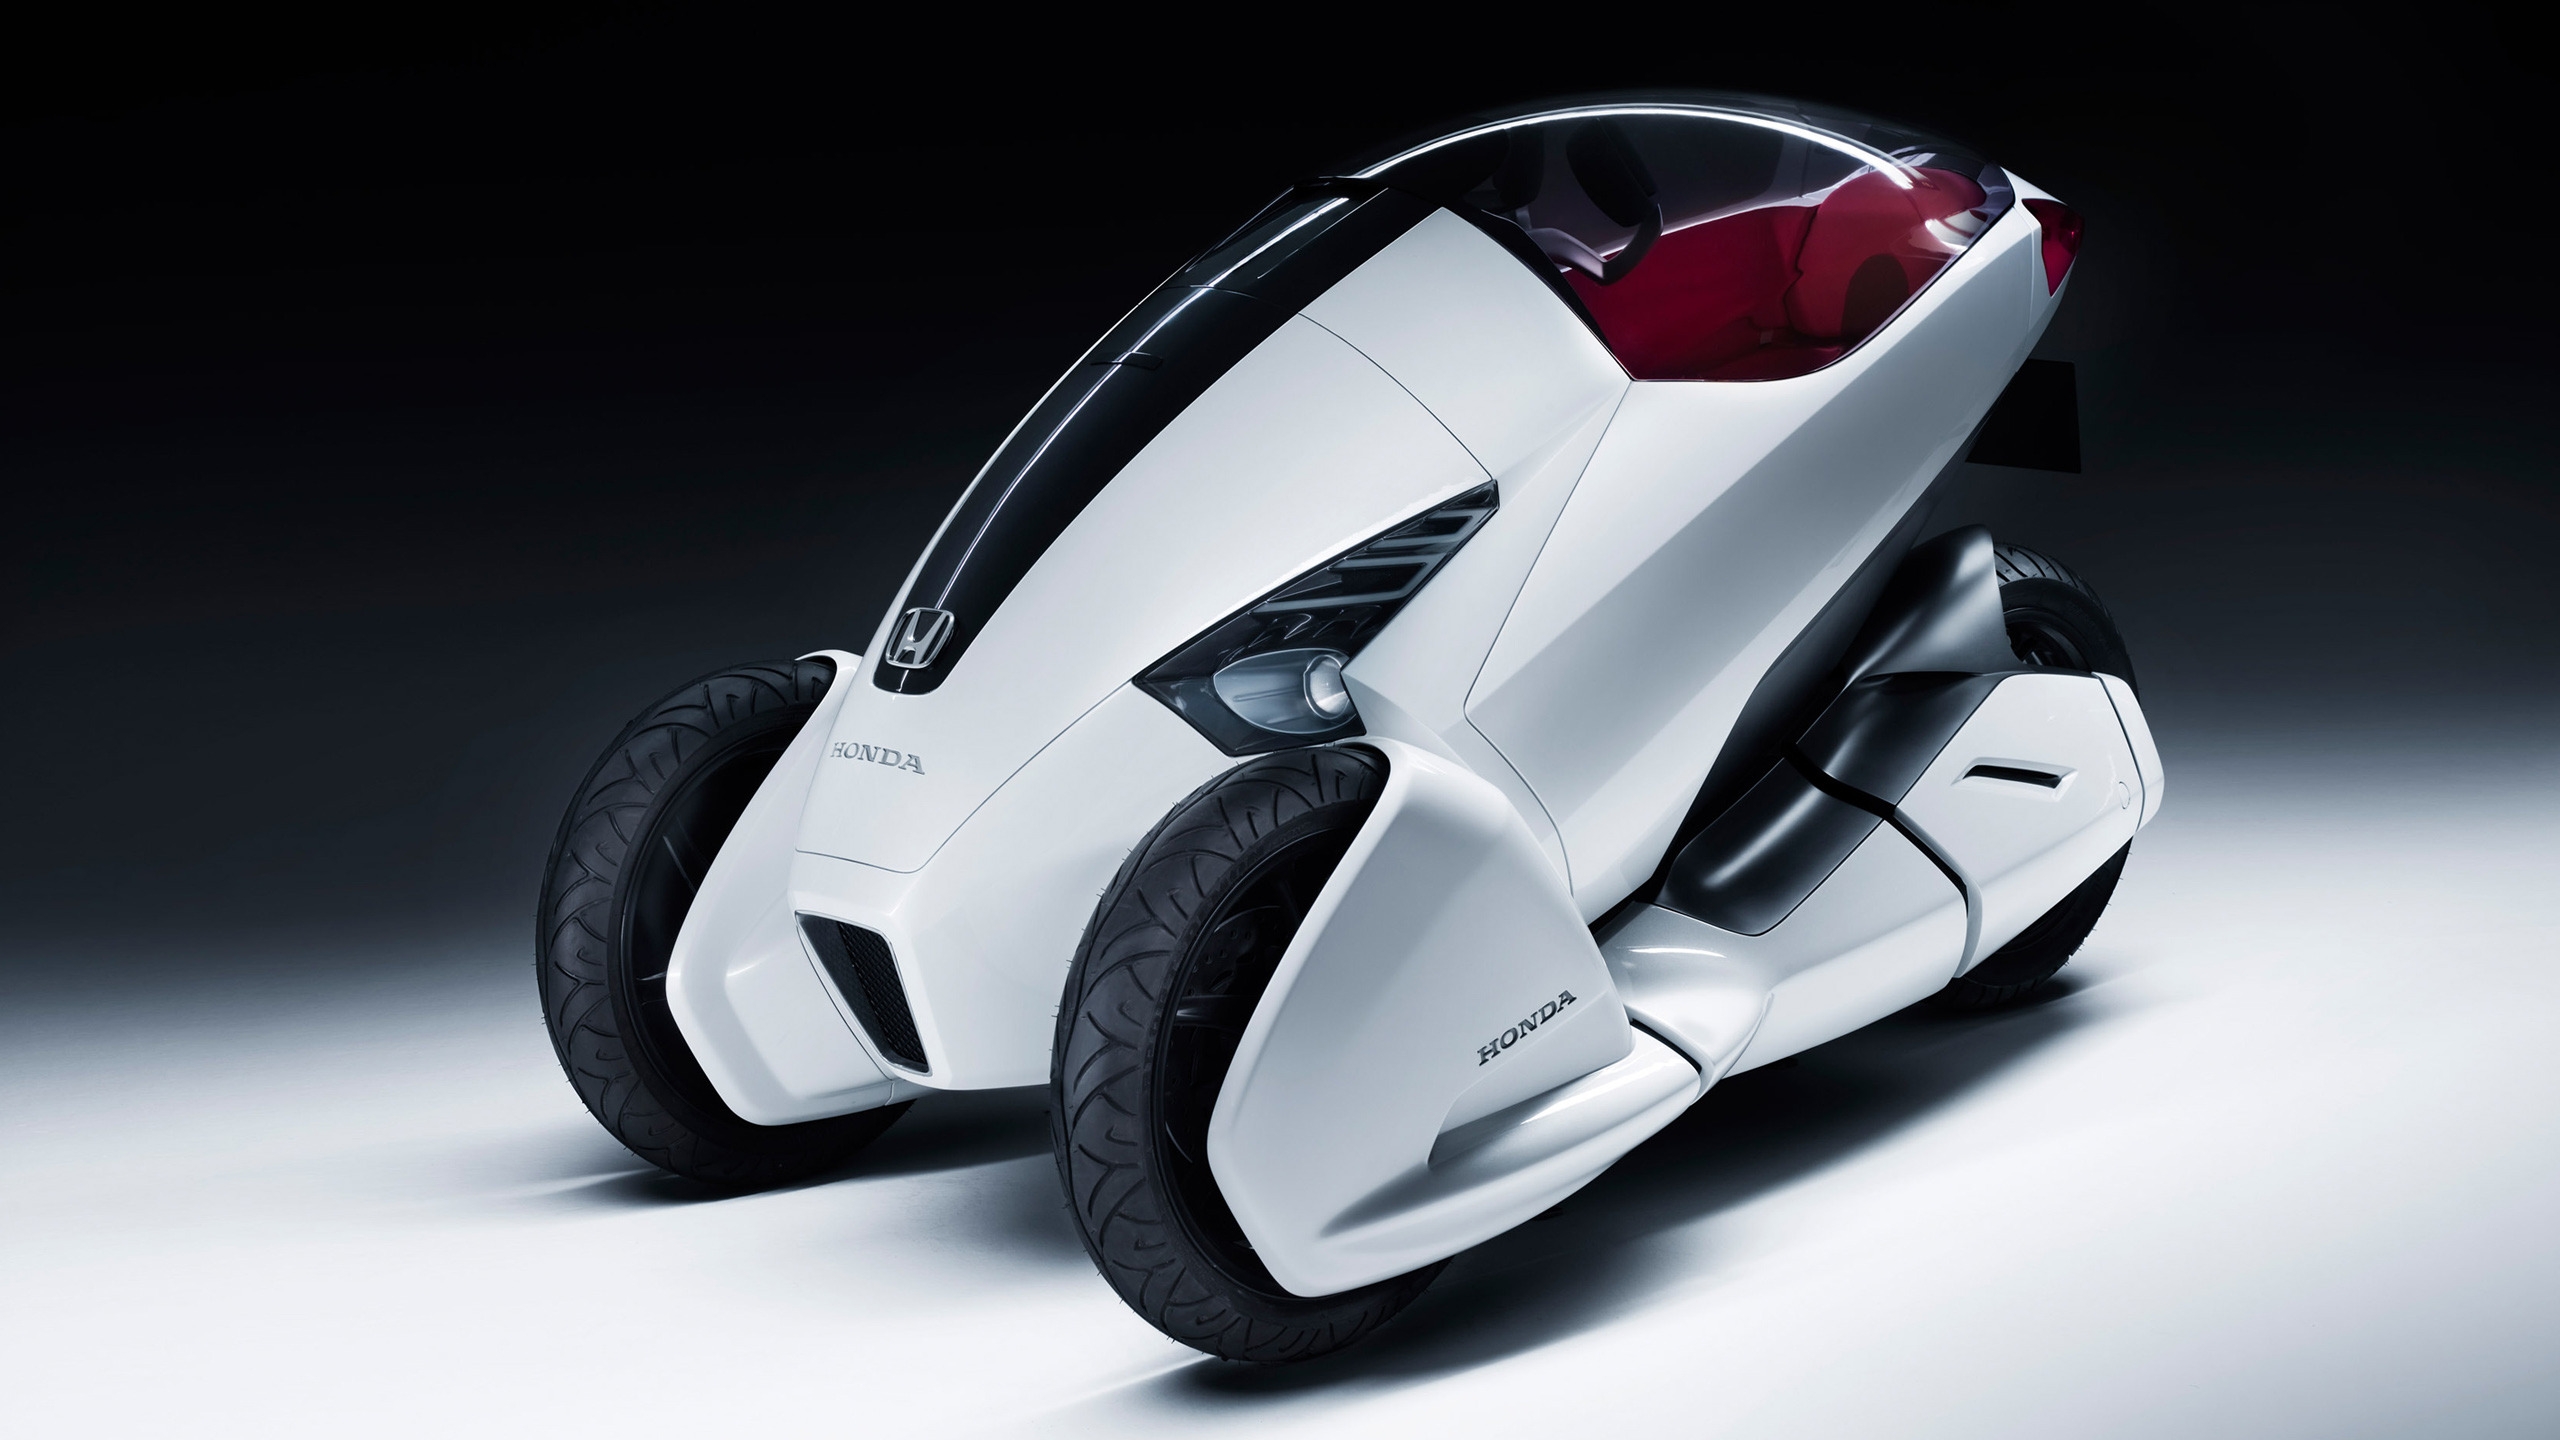 Honda 3RC Concept for 2560x1440 HDTV resolution